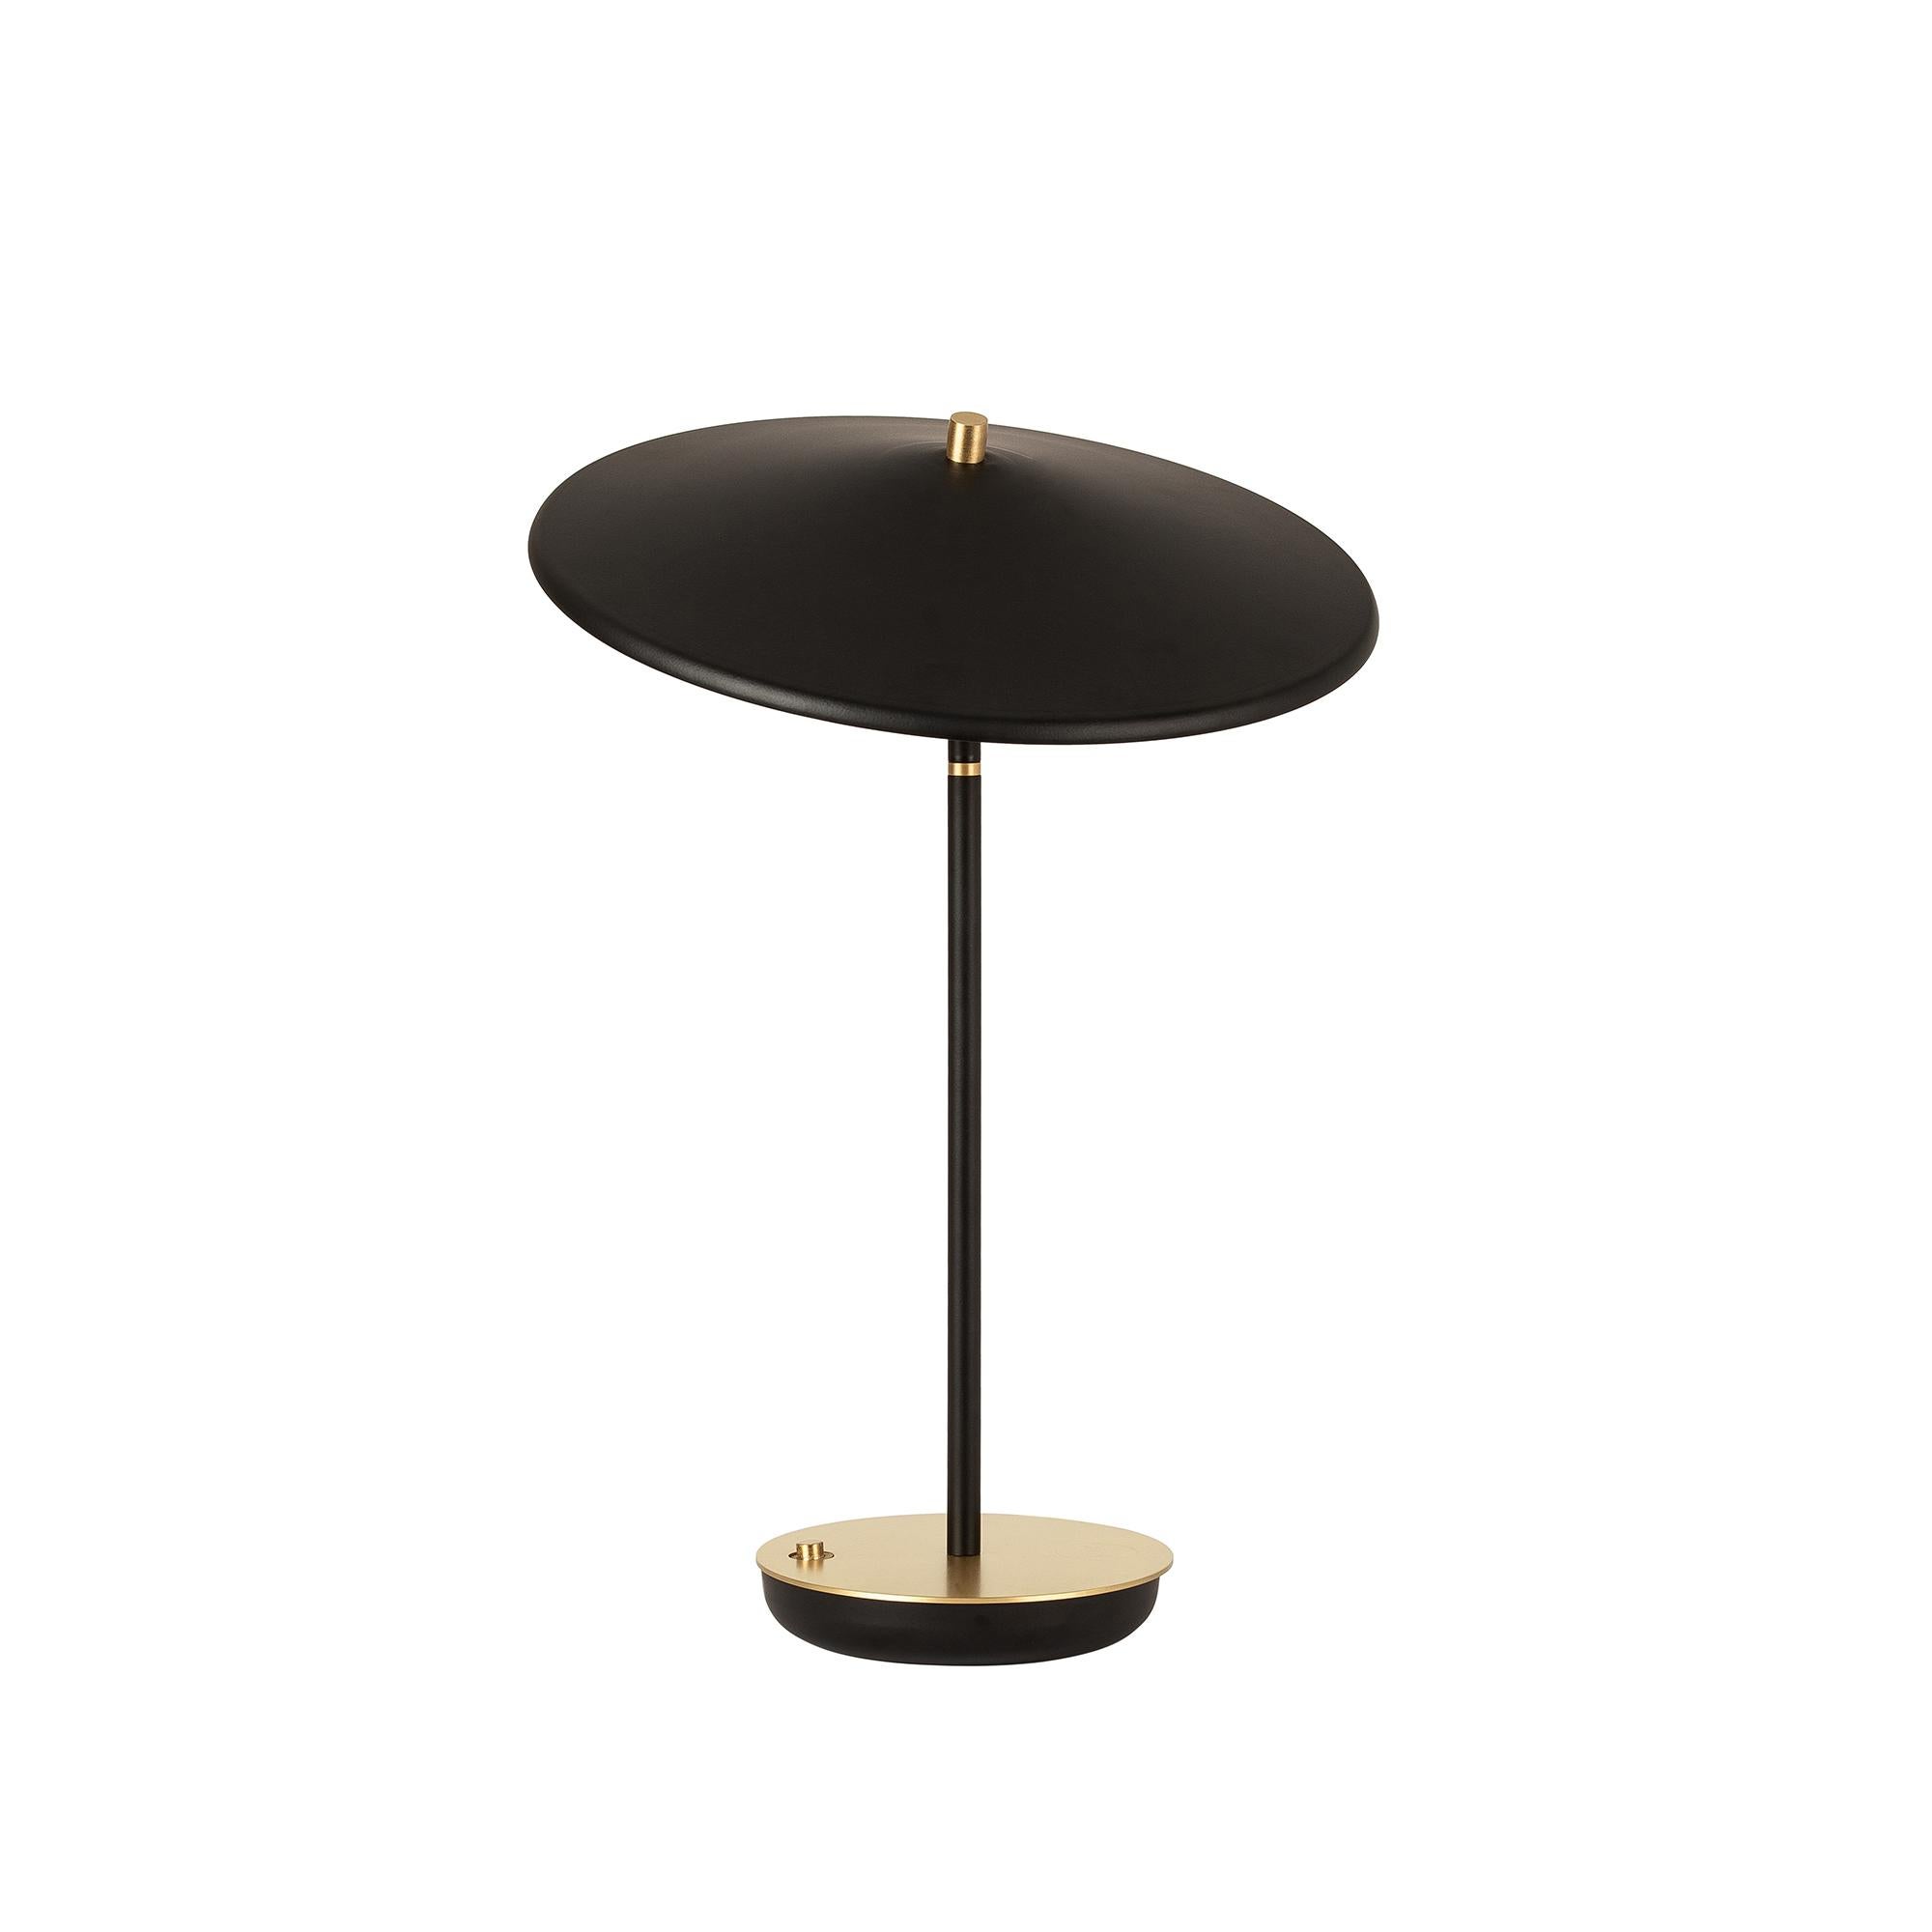 Turkish Brass Table Lamp with Tilting Shader, Black & Gold, Parisian Beret Desk Lamp For Sale